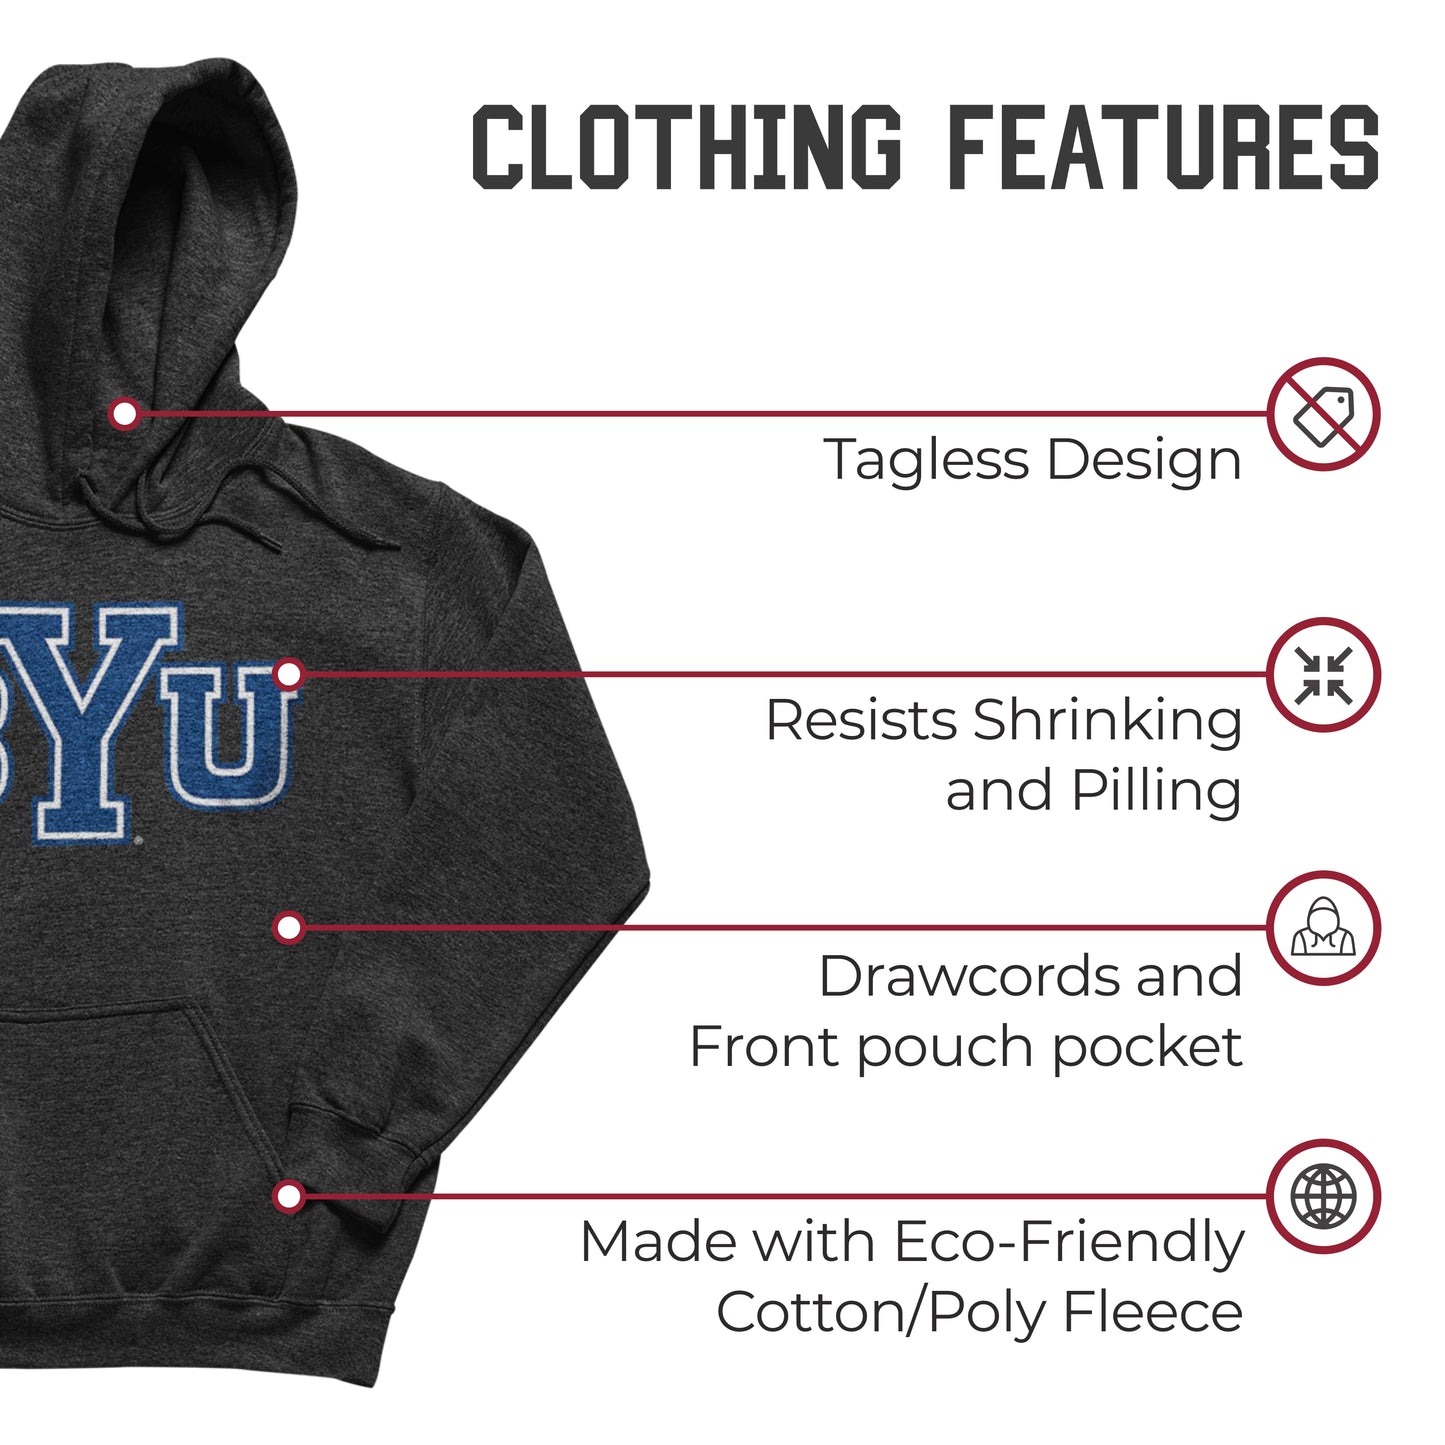 BYU Cougars NCAA Adult Cotton Blend Charcoal Hooded Sweatshirt - Charcoal